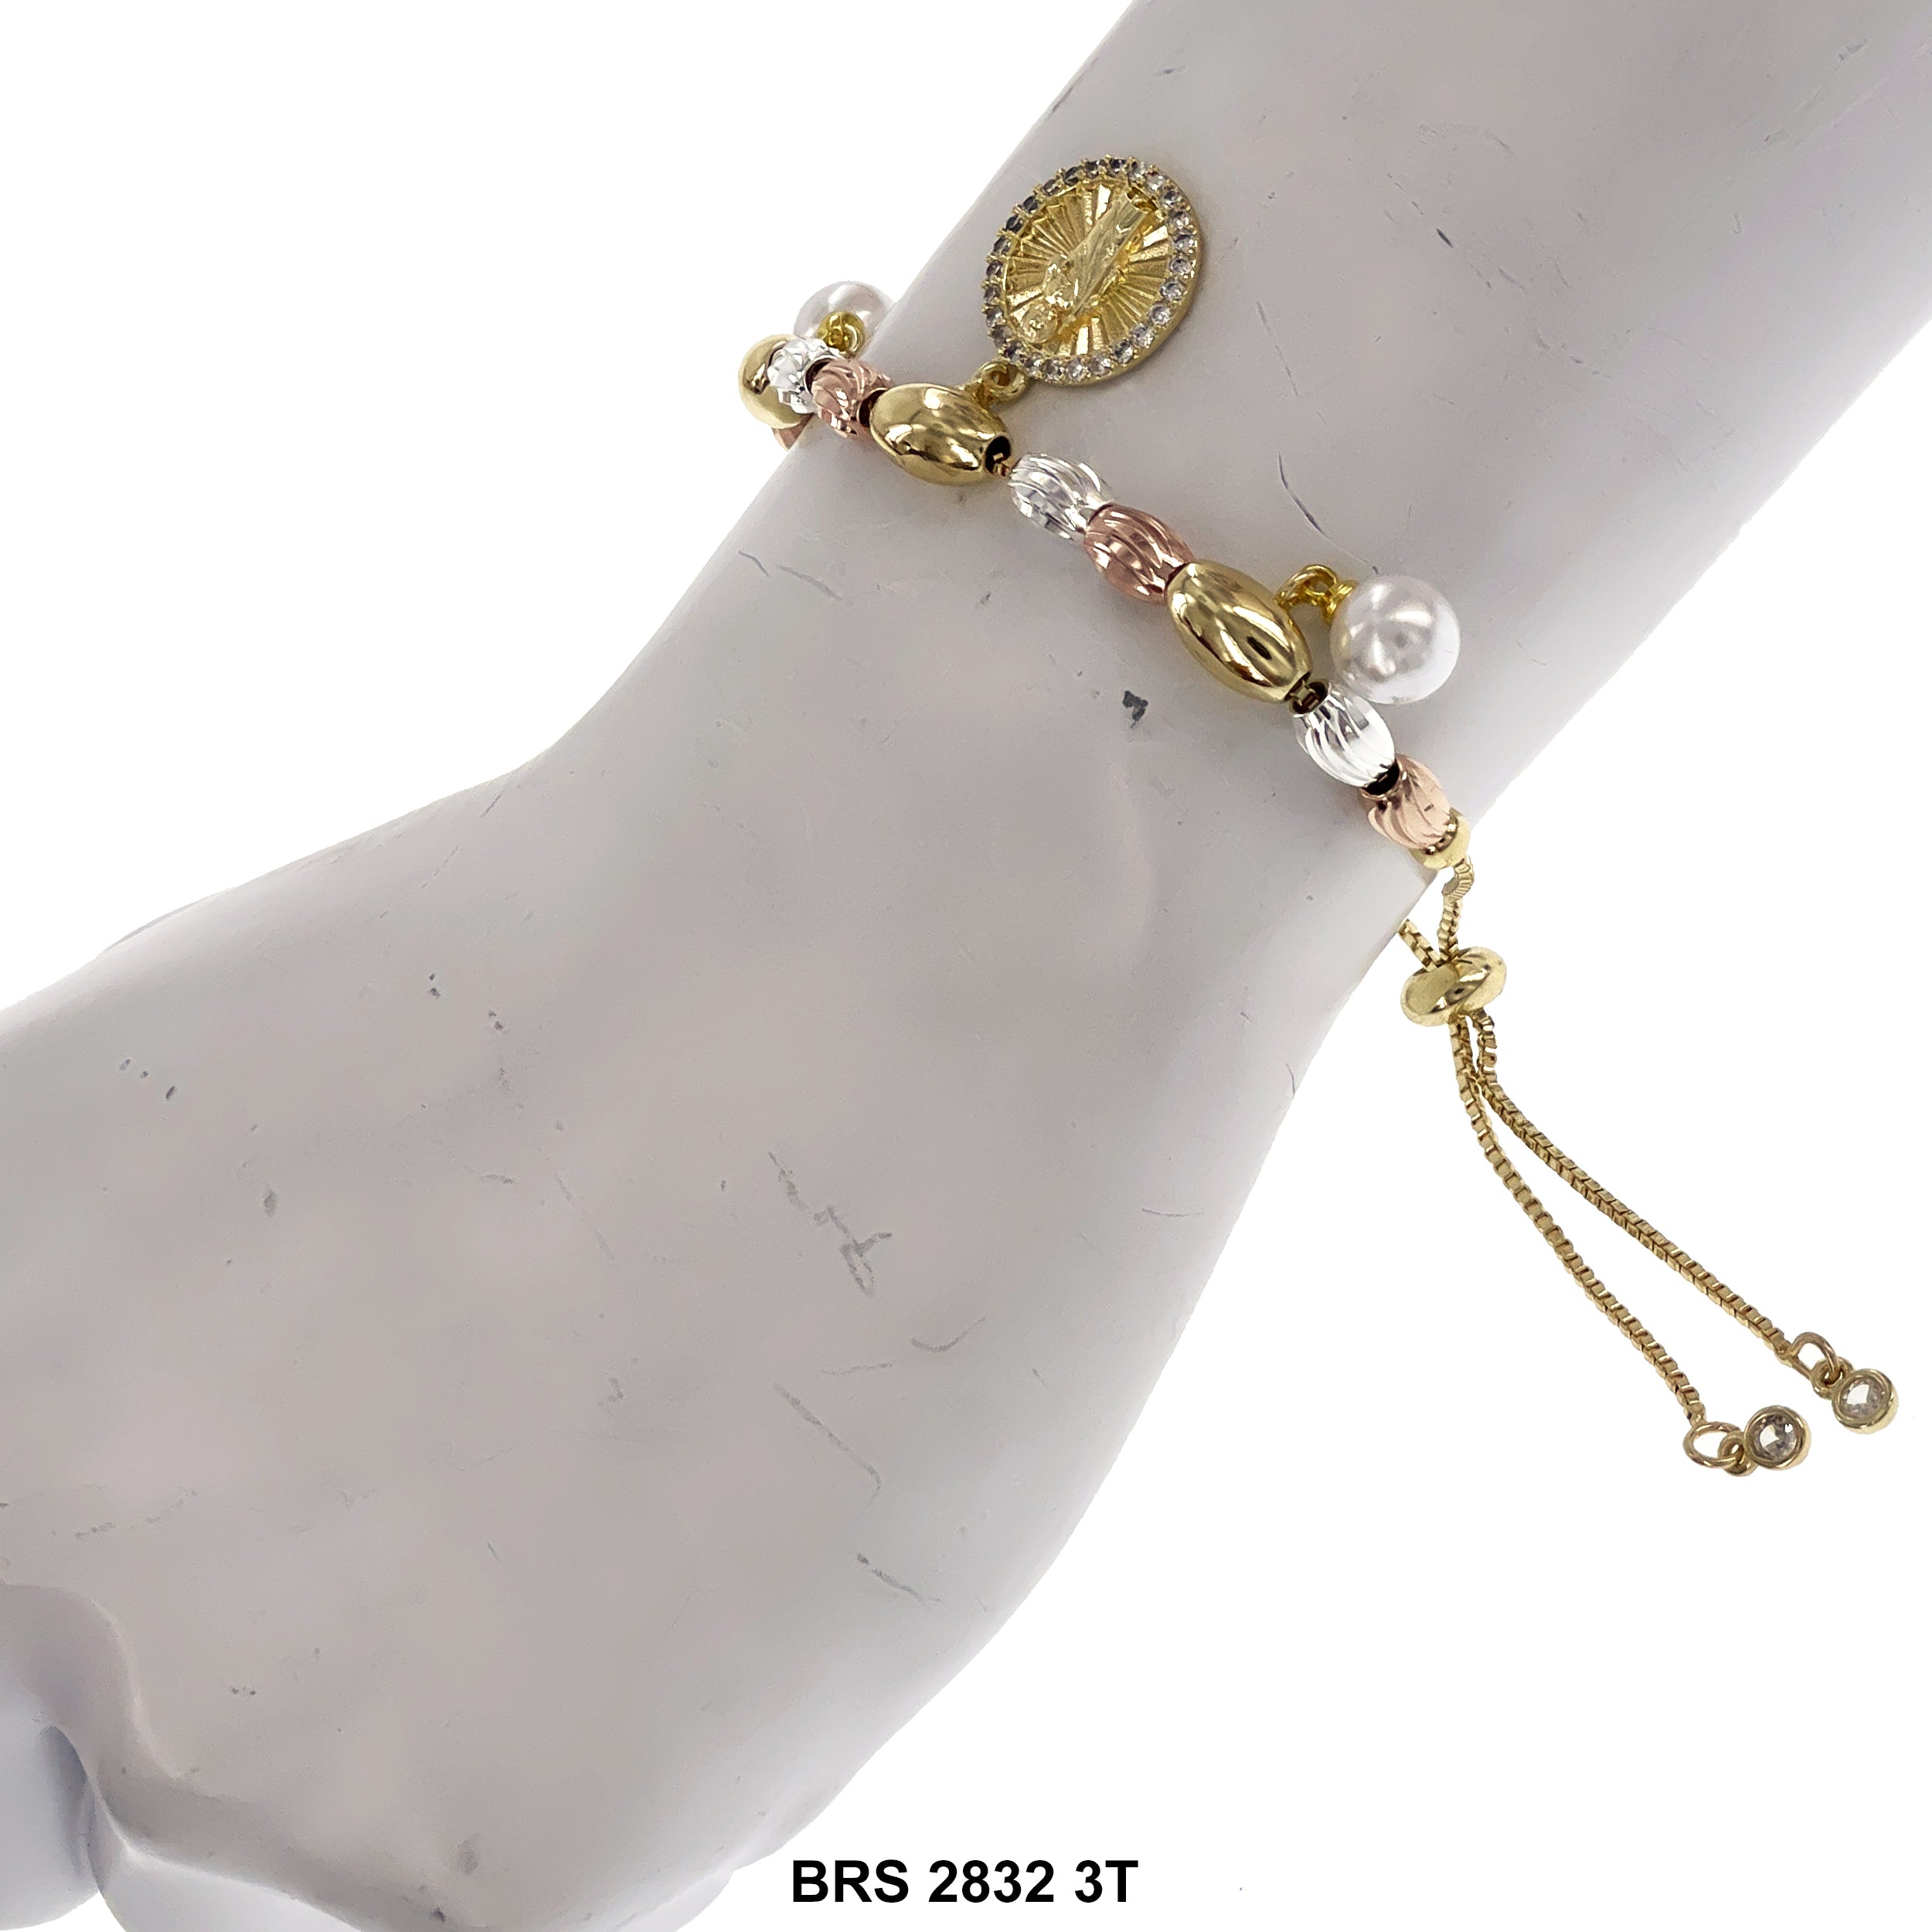 San Judas Pearl Charms Inlayed Oval Beads Adjustable Bracelet BRS 2832 3T